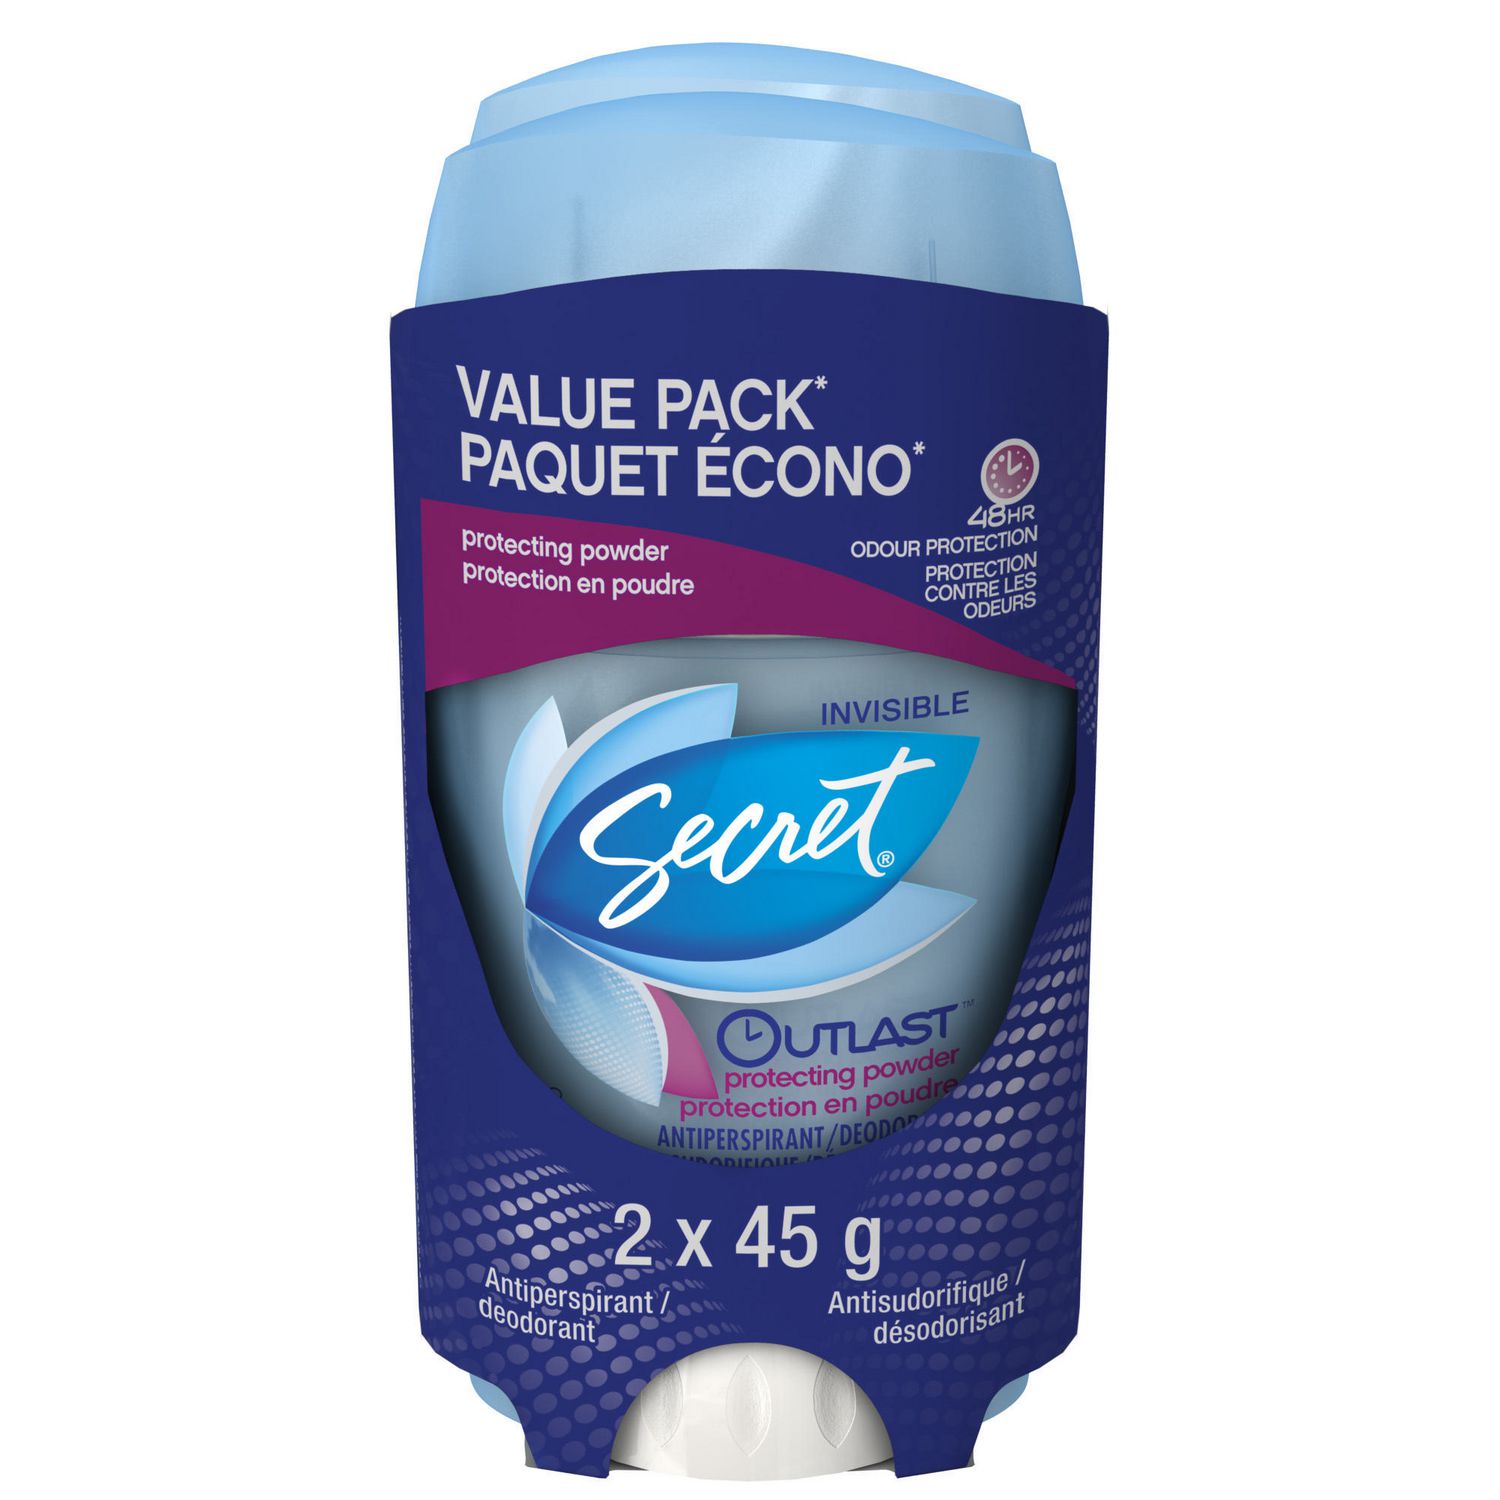 Secret Outlast Invisible Solid Antiperspirant Deodorant for Women